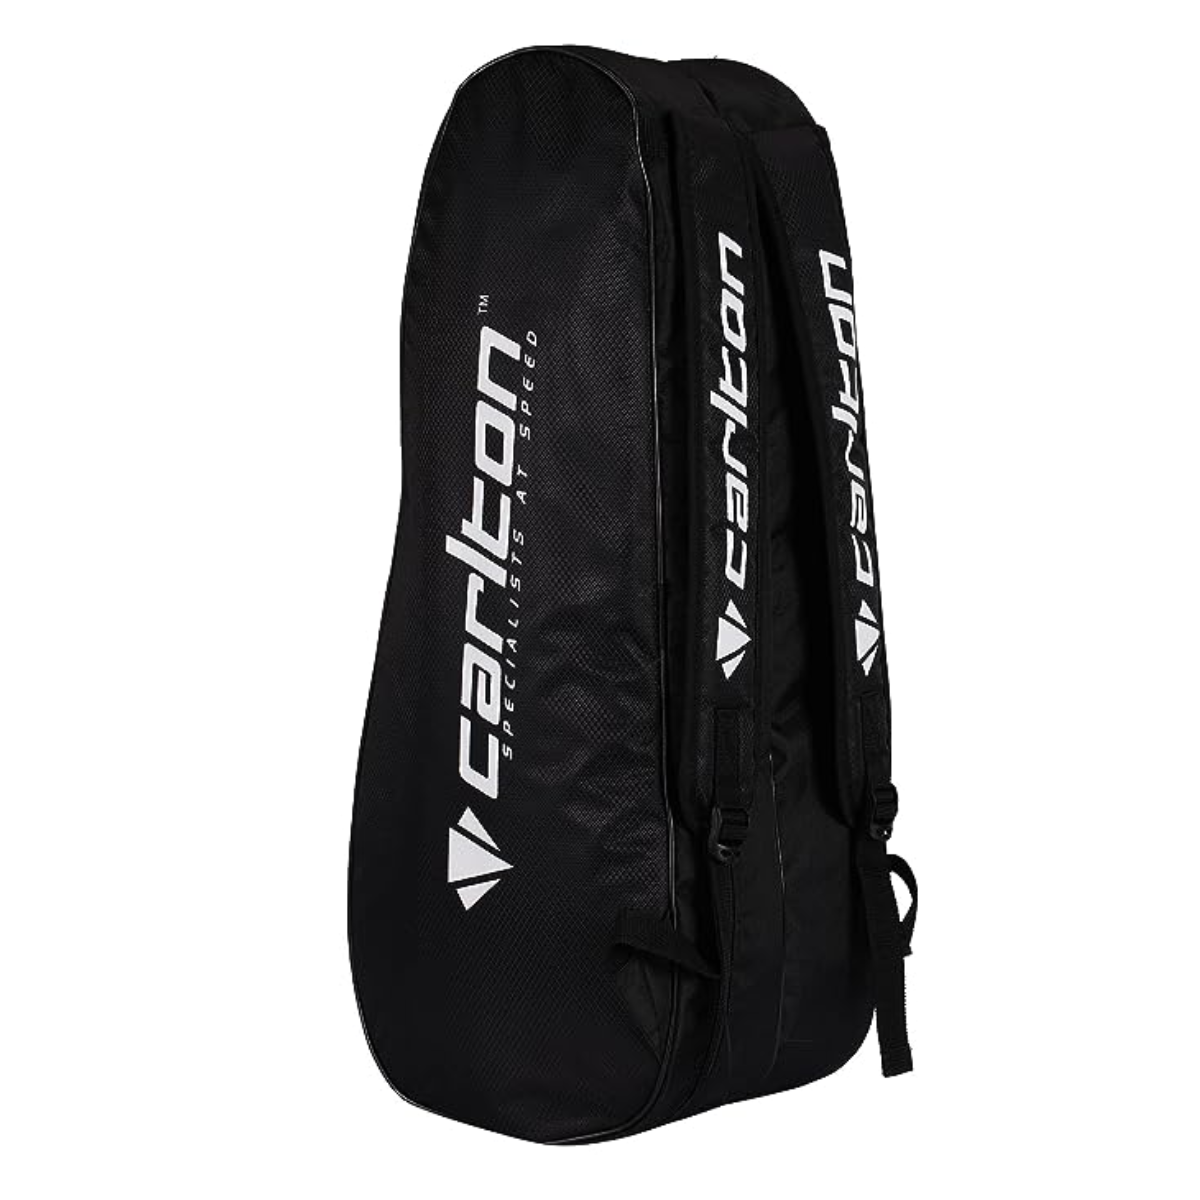 Carlton Vapour Trial 2 Compartment Badminton Kit Bag (Black/Yellow)